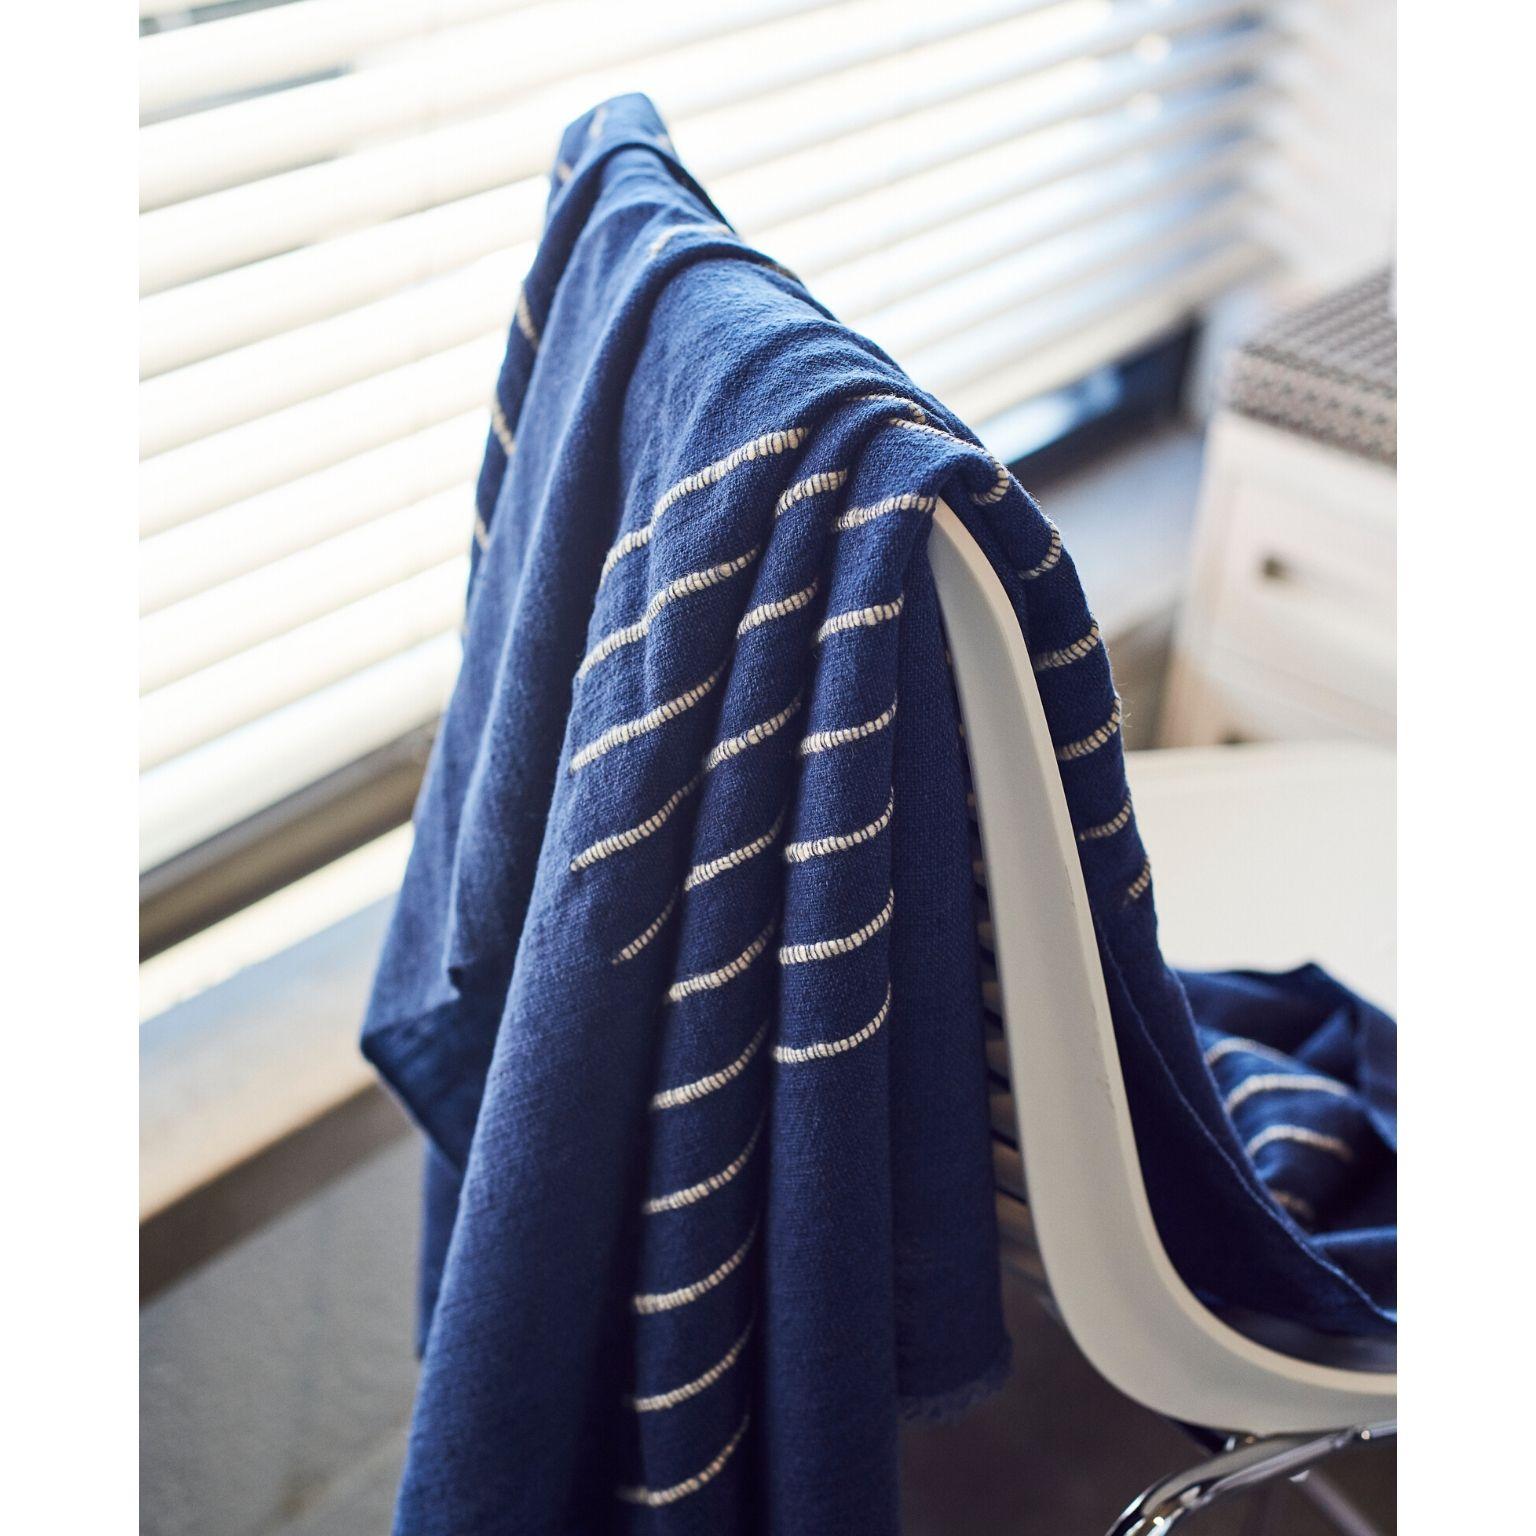 Modern Rosewood Indigo Handloom Queen Size Bedpsread / Coverlet in Stripes Design